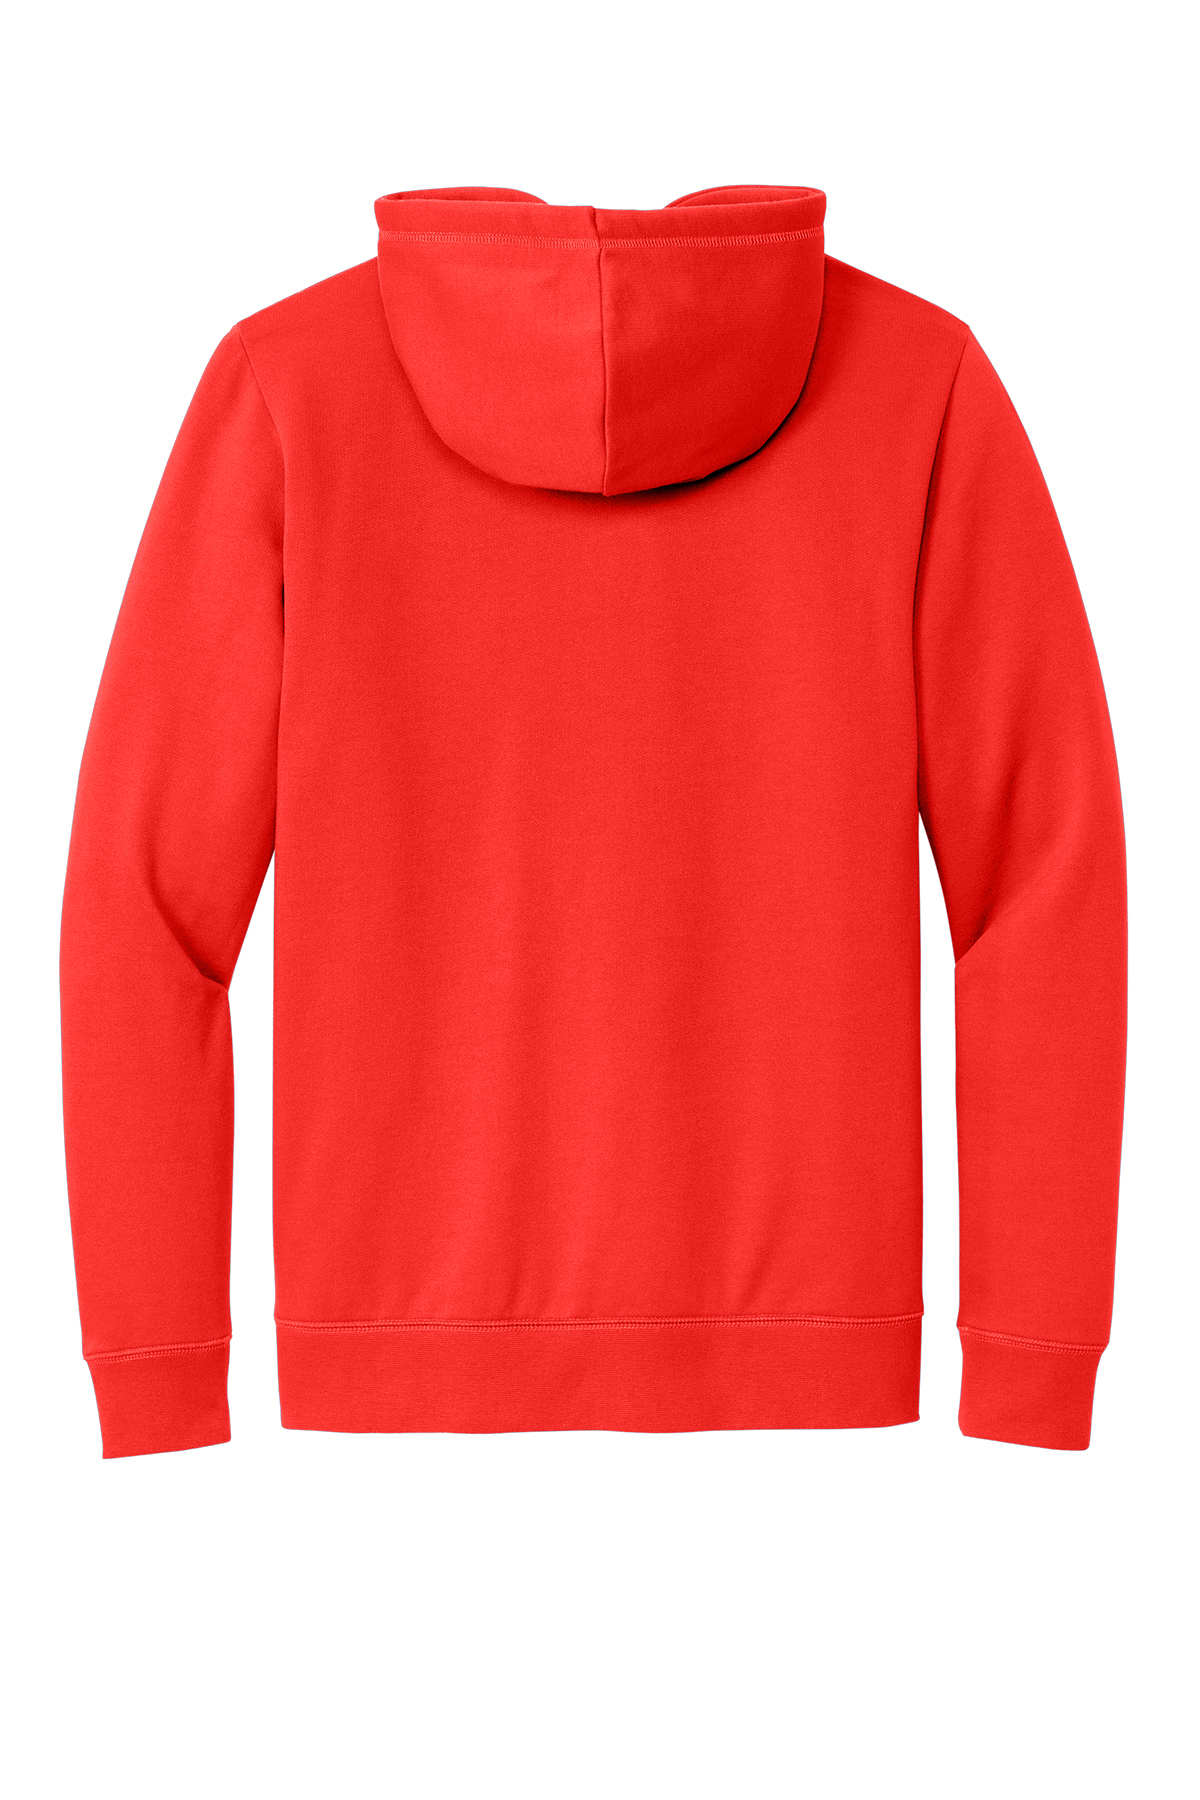 New Era Comeback Fleece Pullover Hoodie | Product | Company Casuals